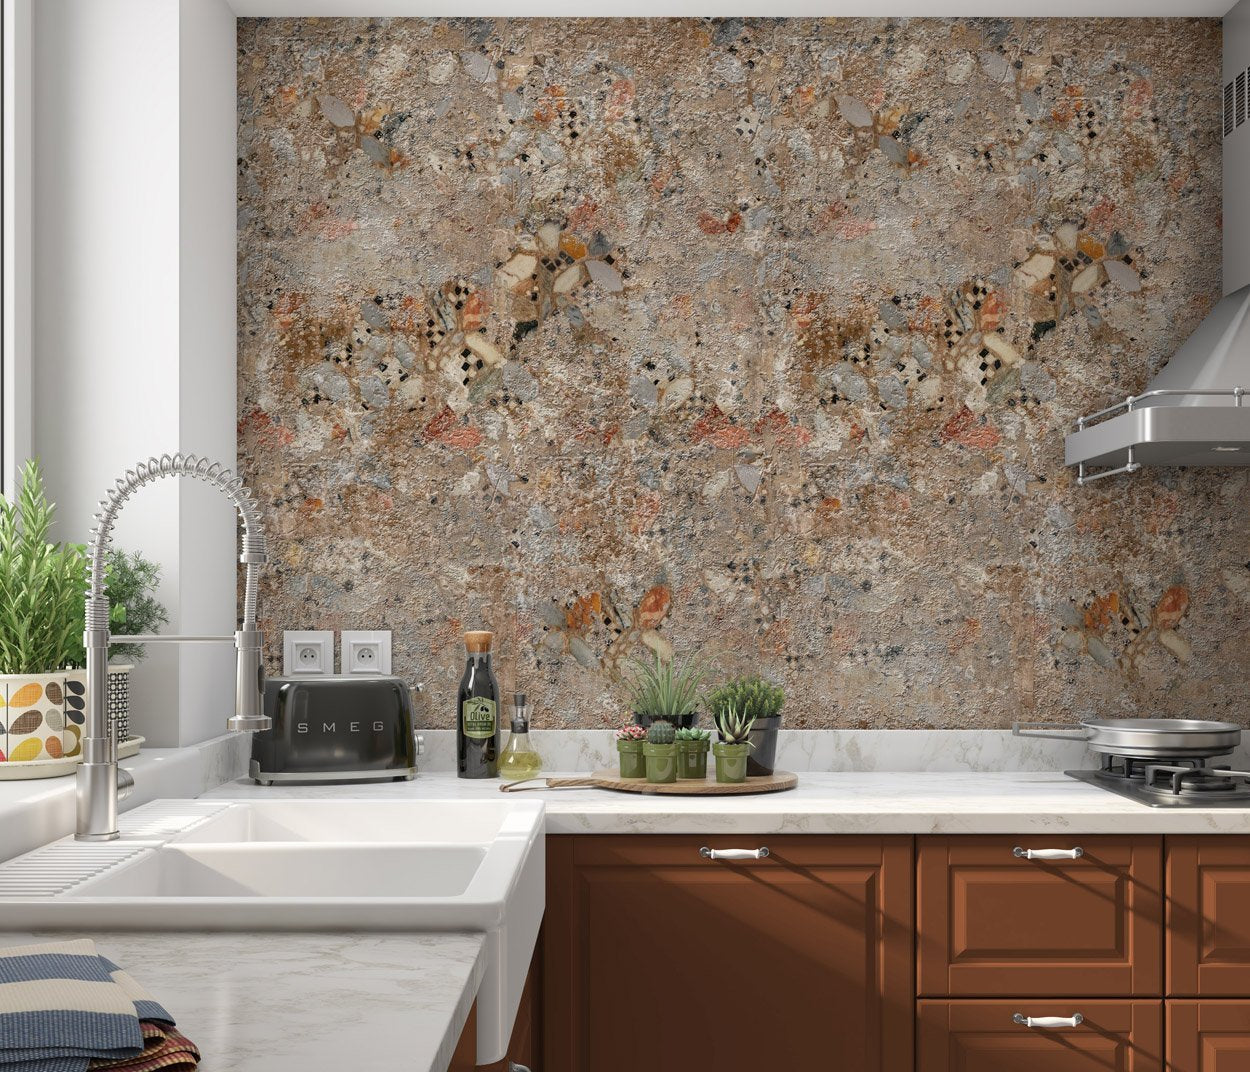 Küchenwand - Mosaik / Stuck / Fliesen